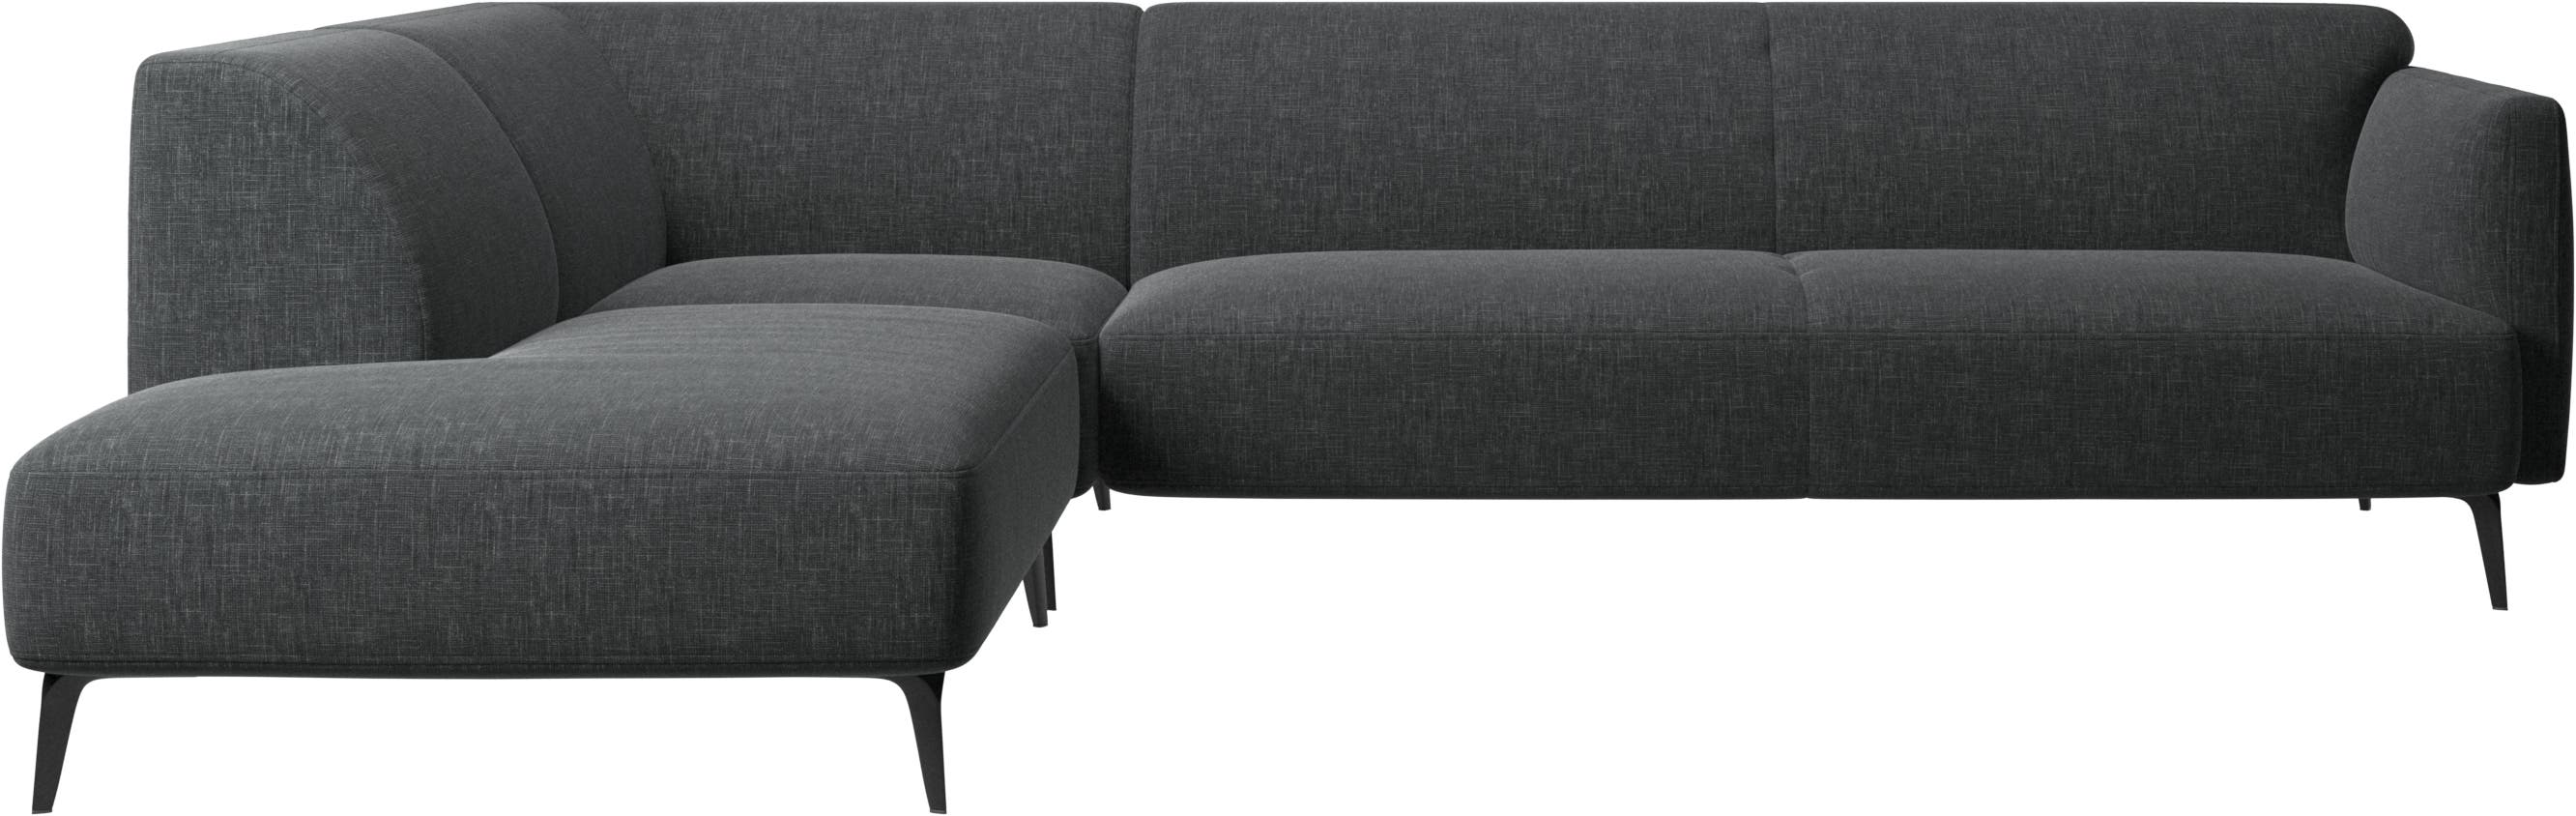 Modena corner sofa with lounging unit